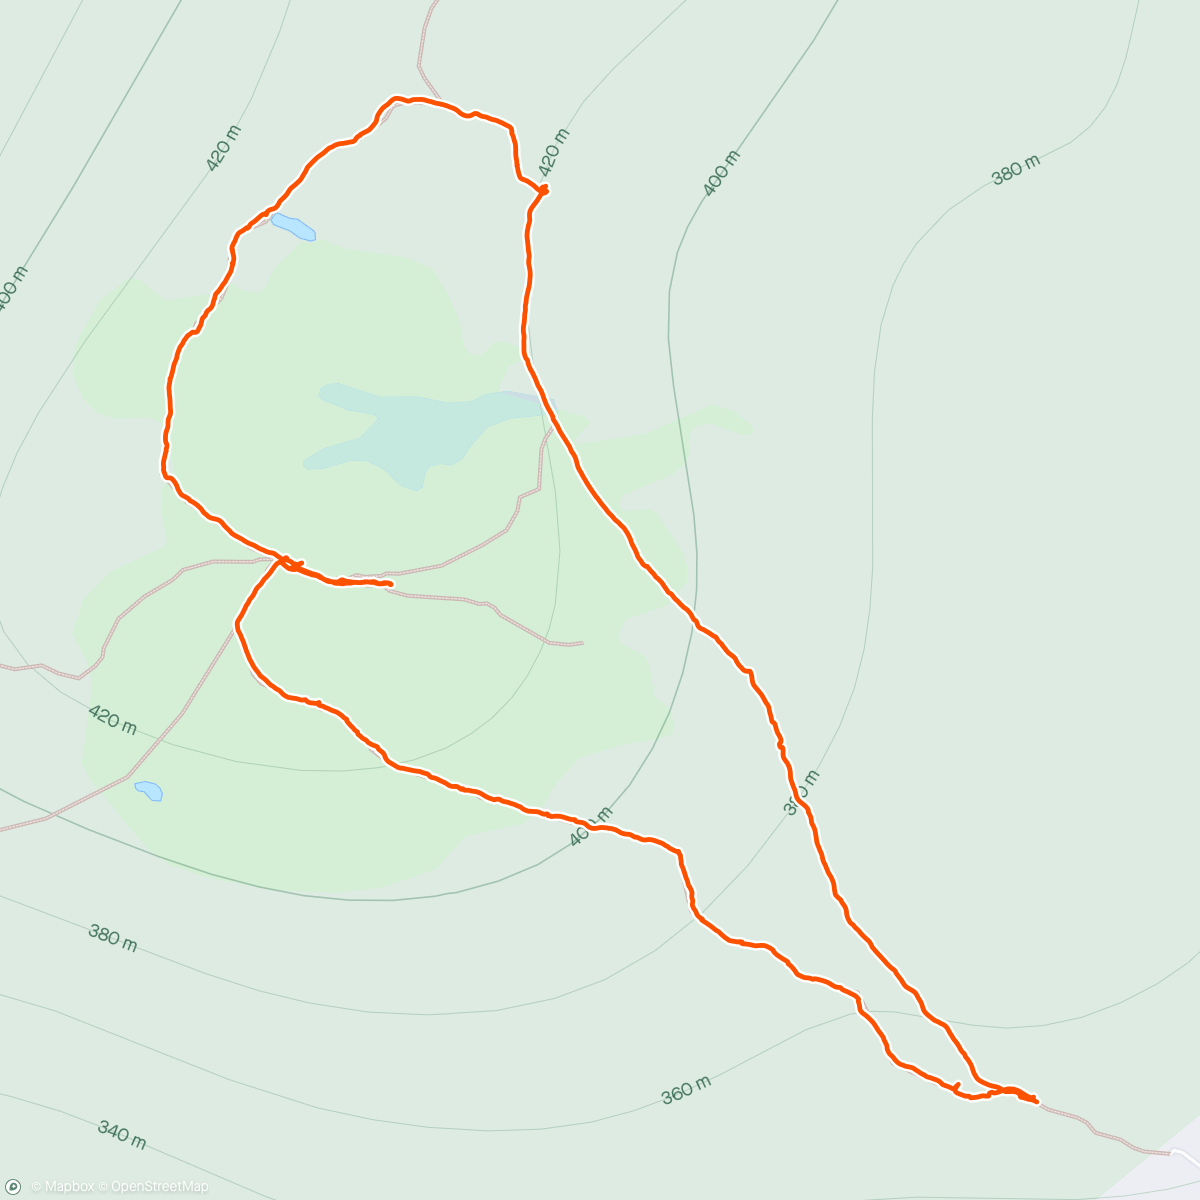 Map of the activity, Riisin rääpäs trail in het Riisitunturi National Park